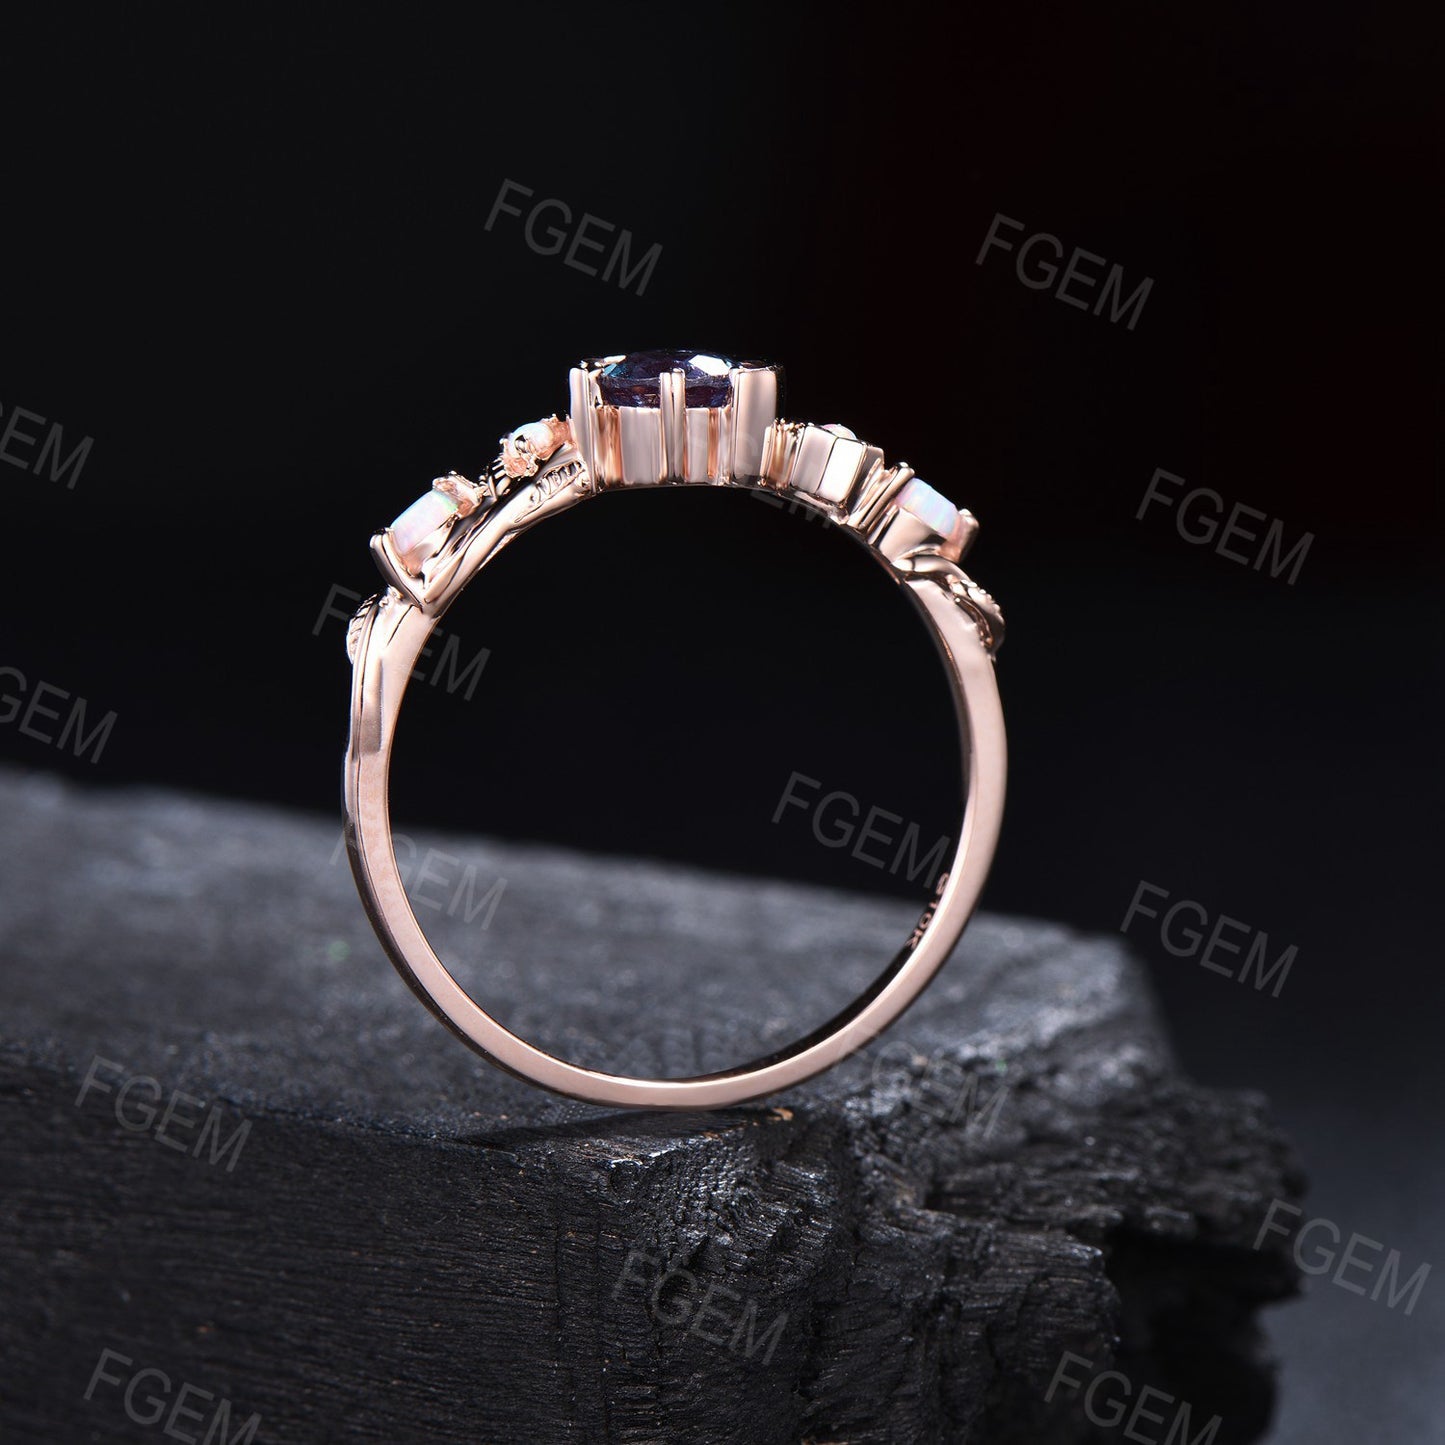 Nature Inspired Color-Change Alexandrite Amethyst Ring Unique Moon Star Design Celestial Wedding Ring Twist Leaf Vine Round Alexandrite Ring